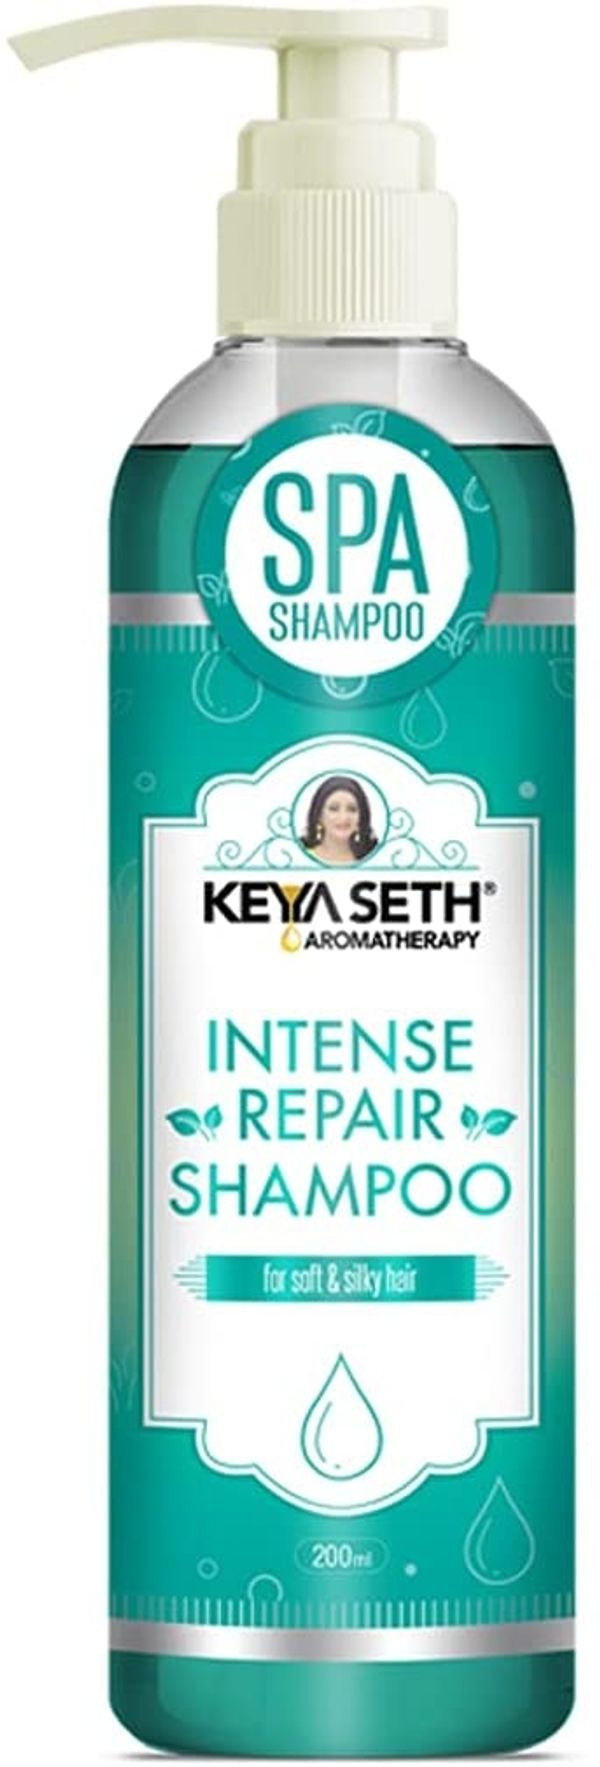 Keya seth  Keya Seth Aromatherapy, Intense Repair Shampoo, 200ml 